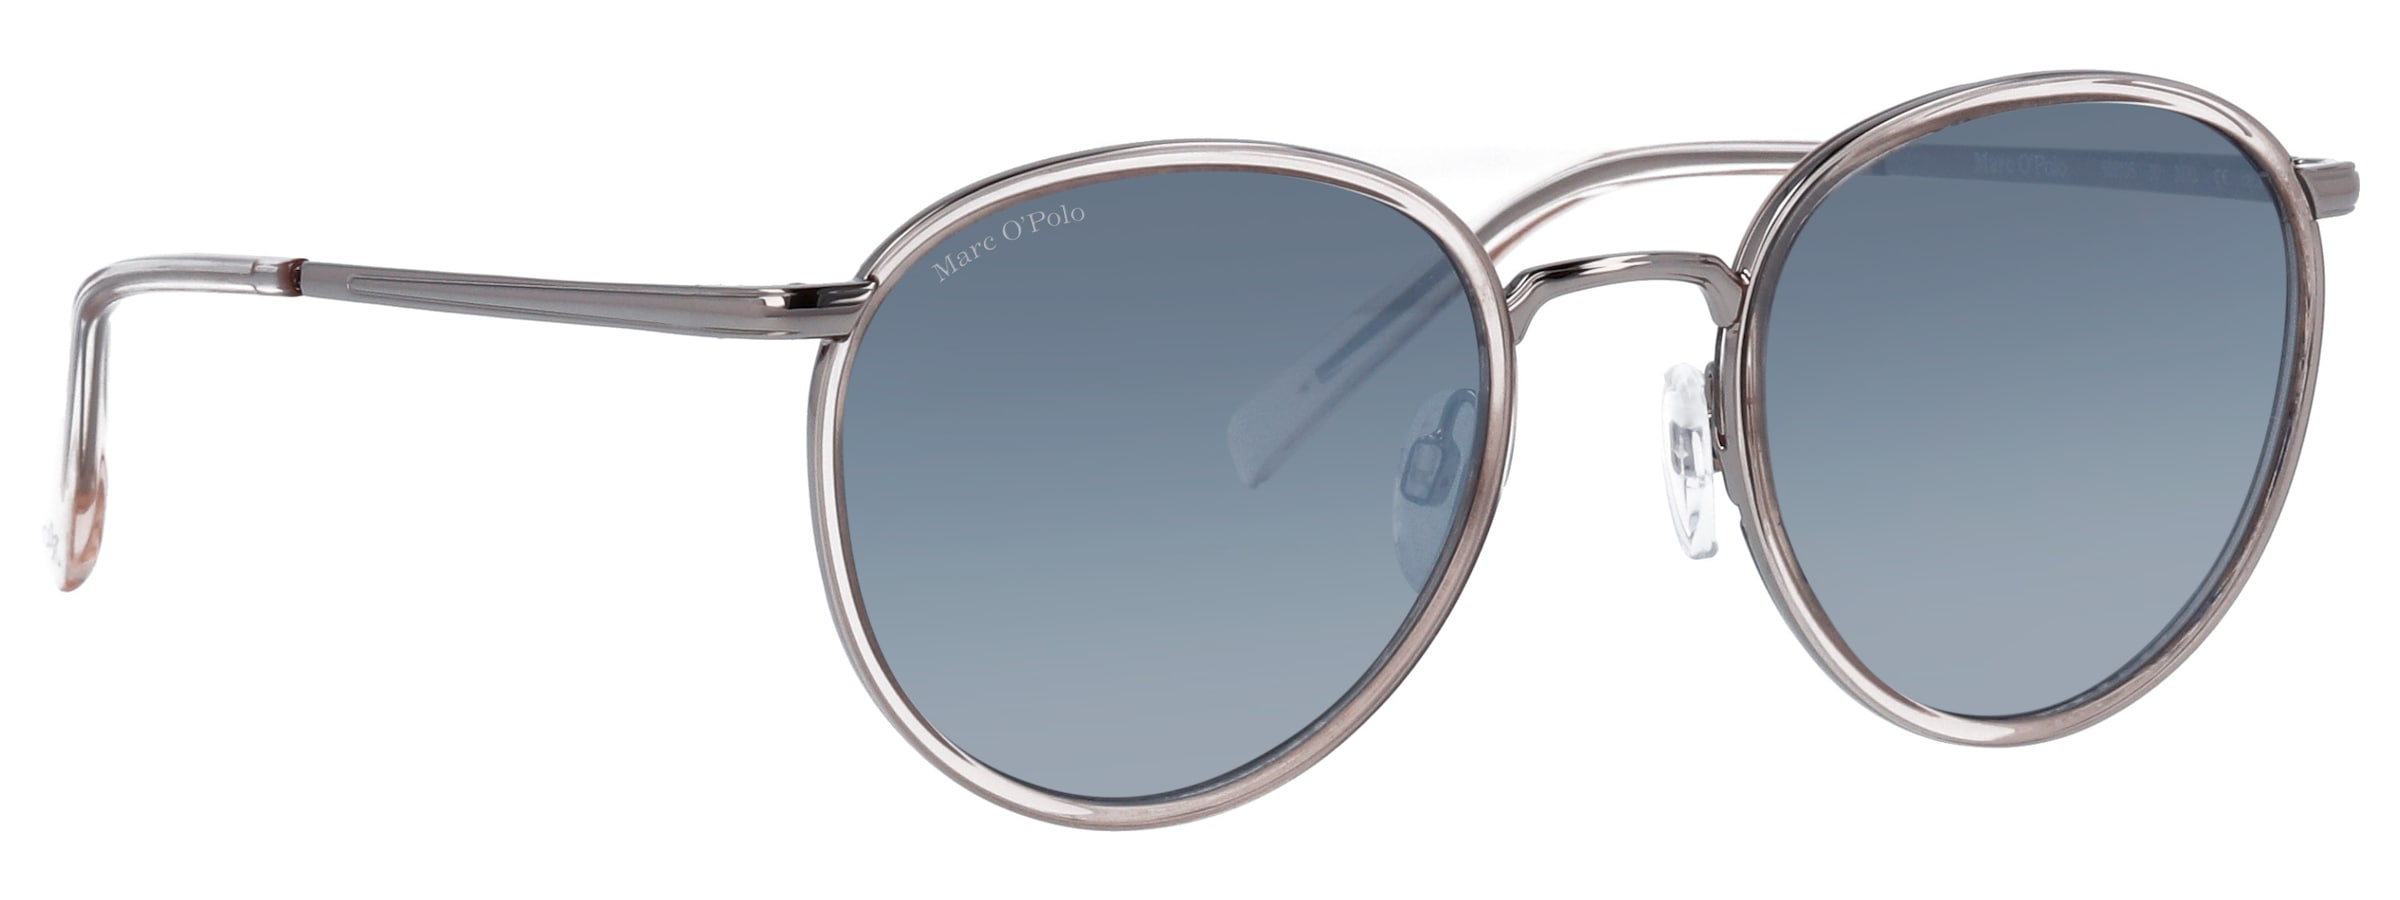 Marc O'Polo Sonnenbrille »Modell 505105«, Panto-Form